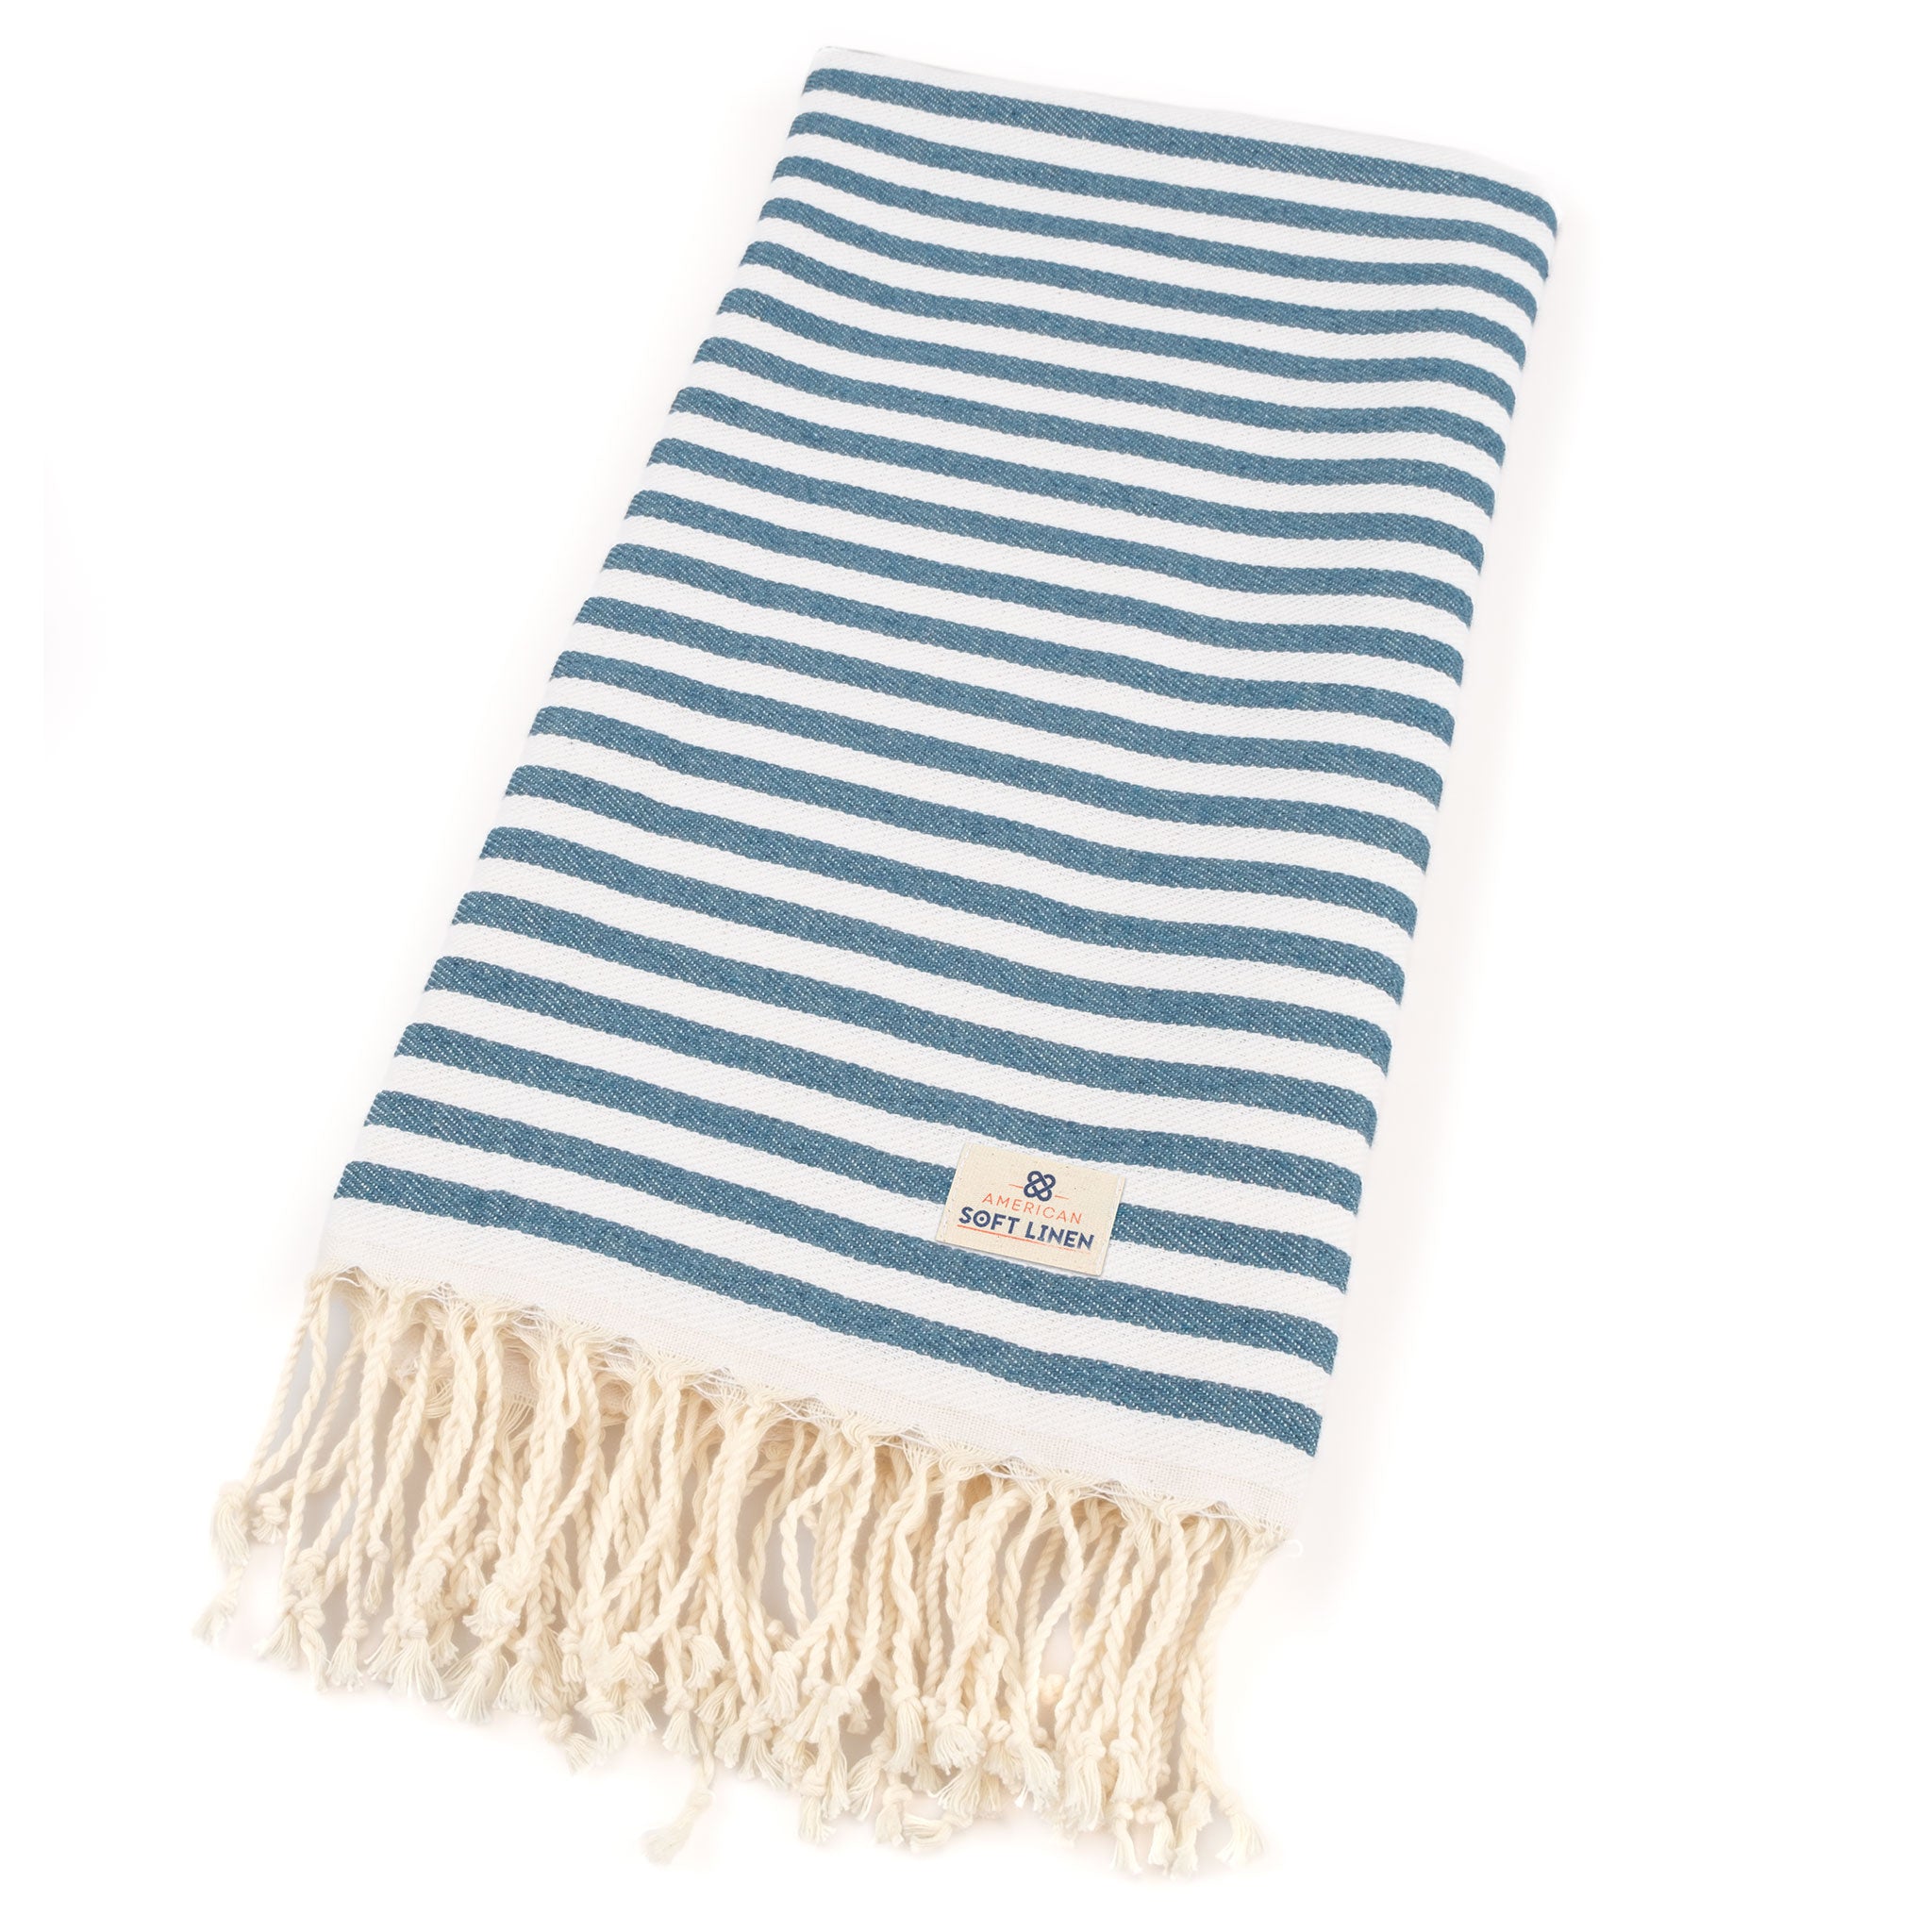 American Soft Linen - 100% Cotton Turkish Peshtemal Towels 40x70 Inches - Petrol-Blue - 5